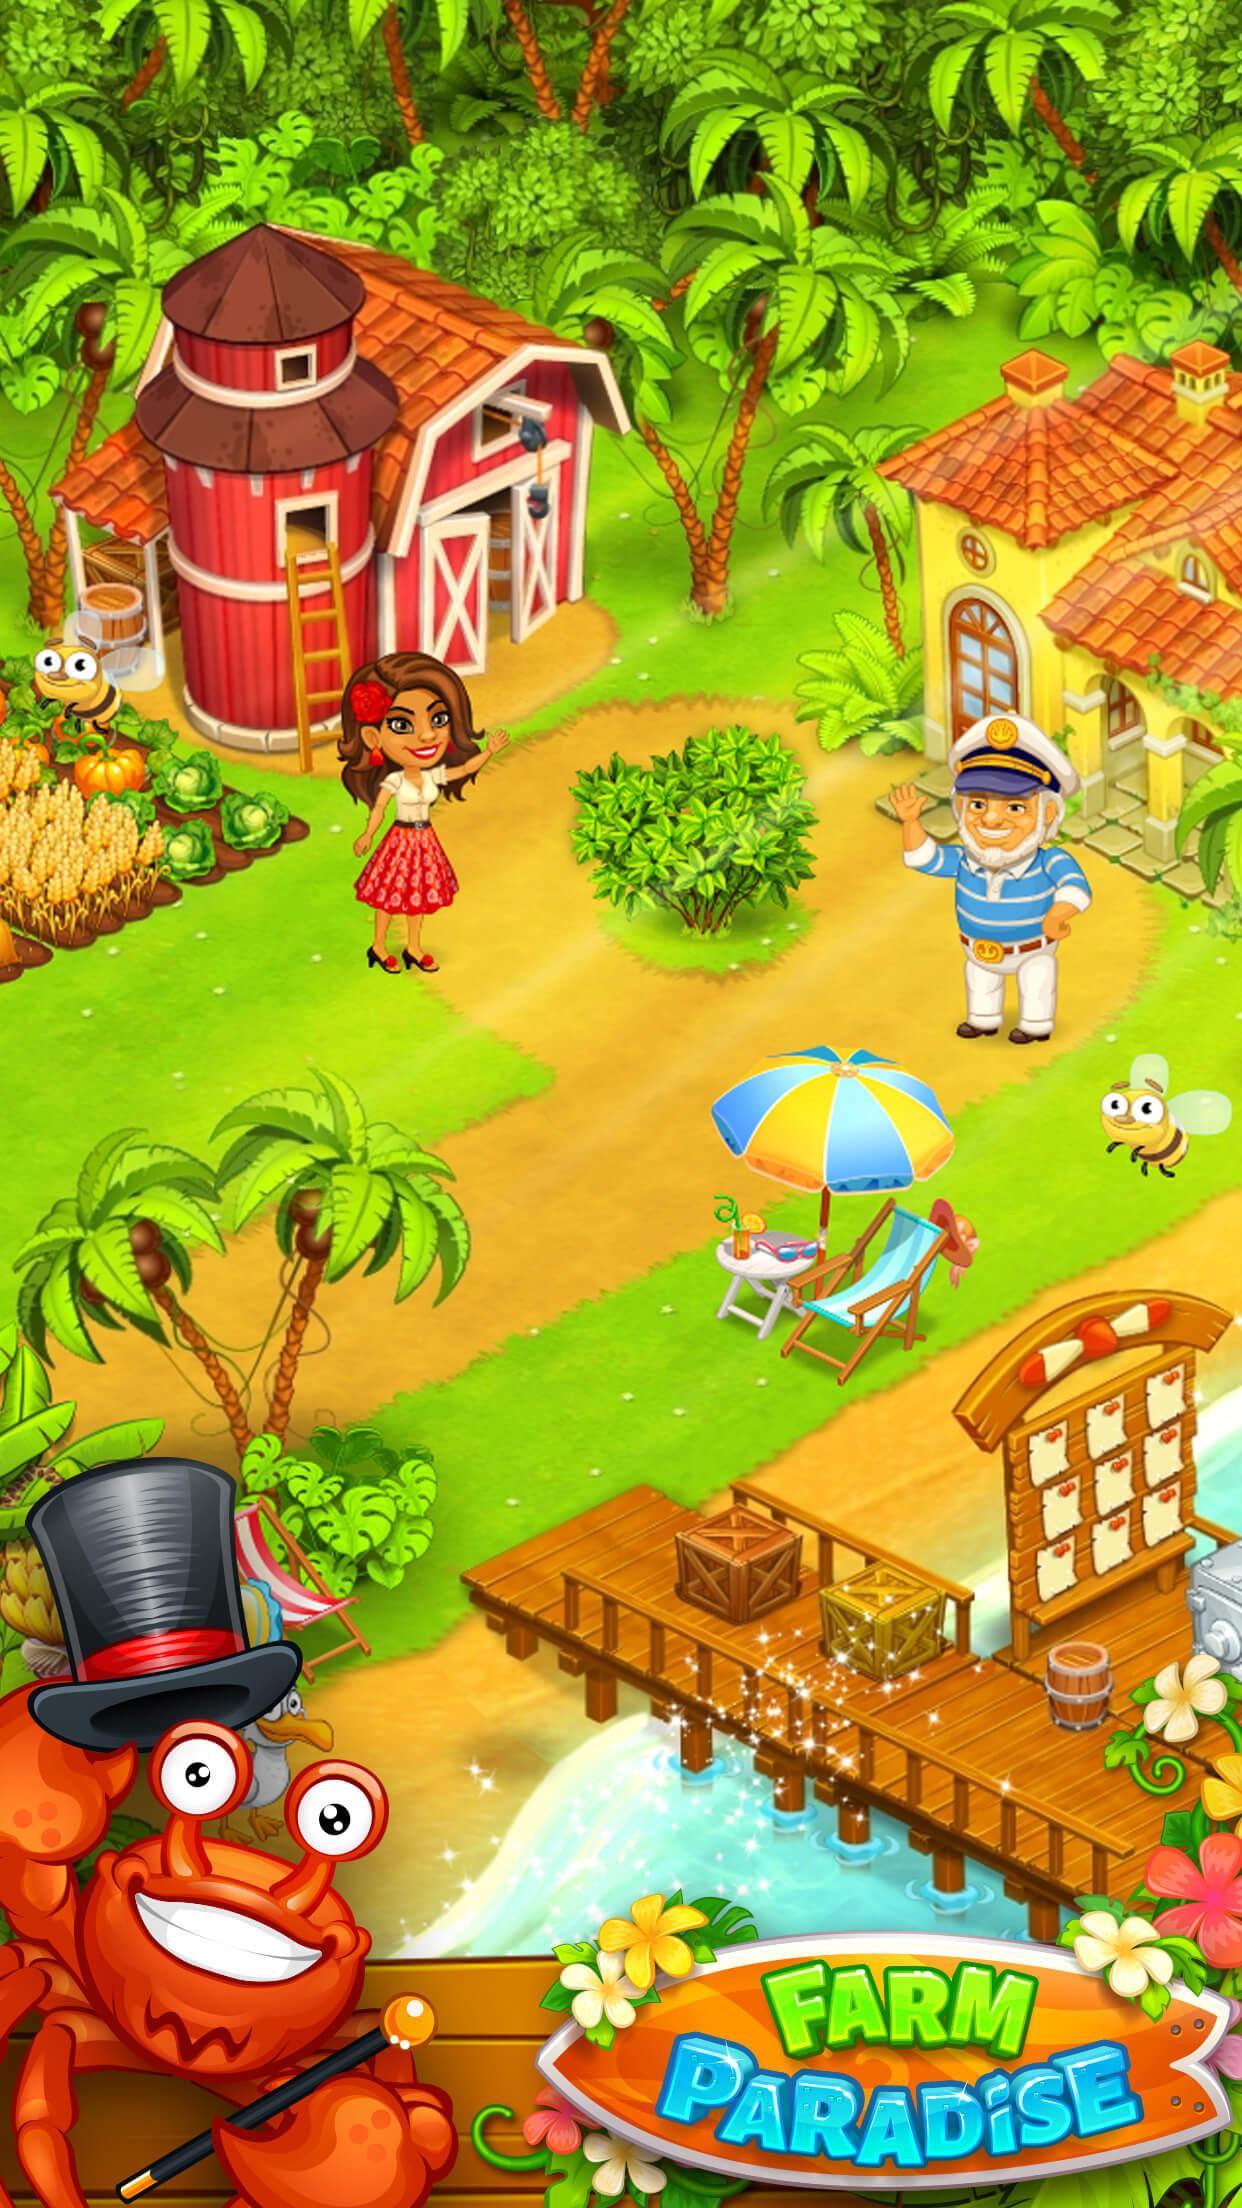 Farm Paradise Fun farm trade game at lost island 2.17 Screenshot 9